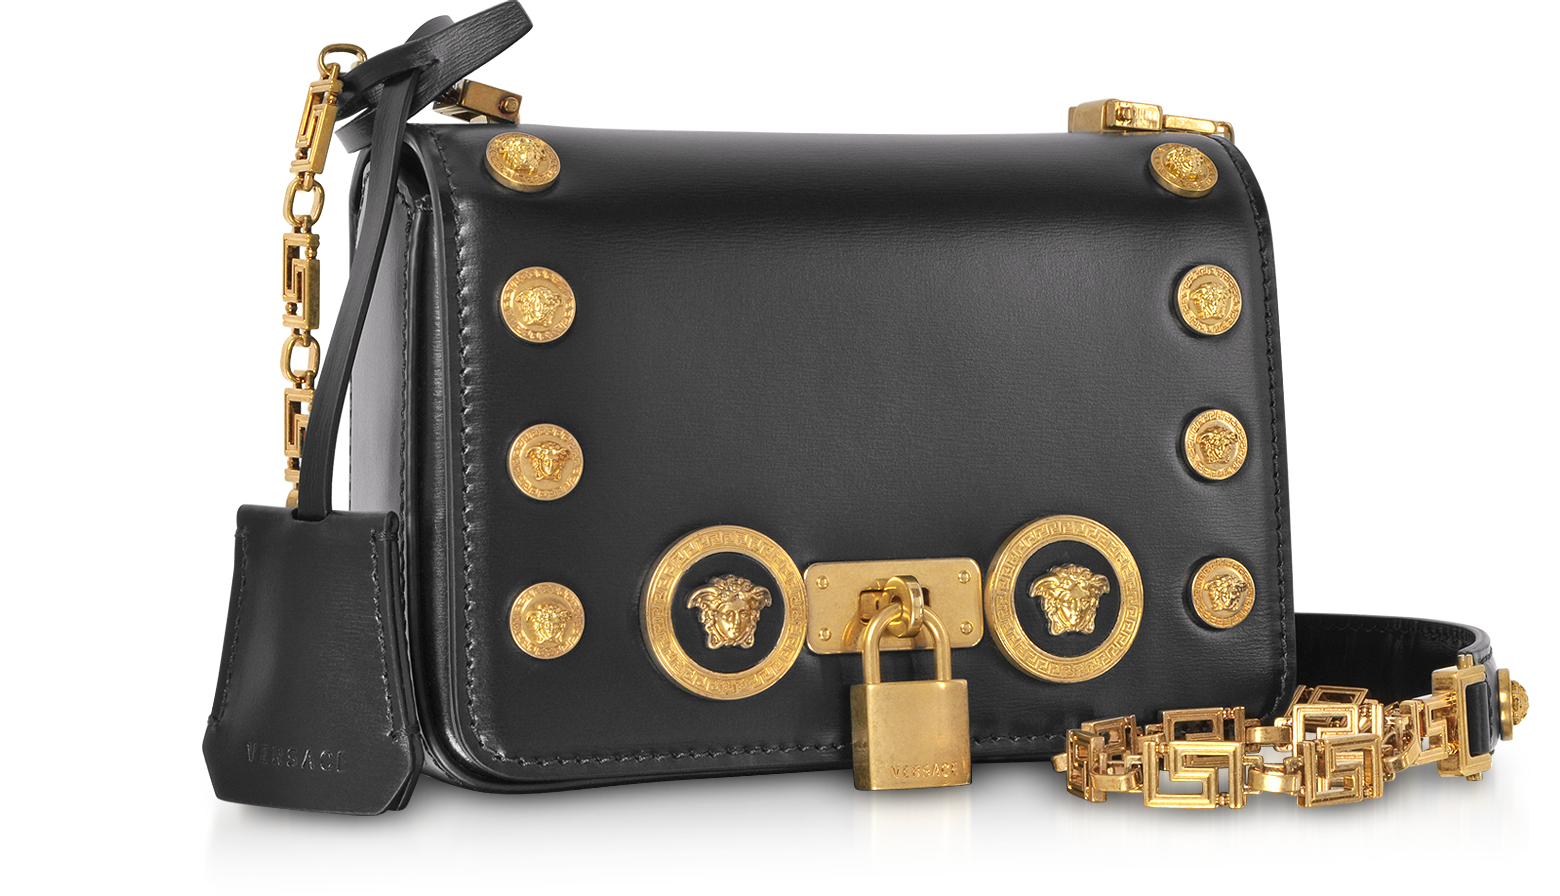 NEW GIANNI VERSACE TRIBUTE BLACK LEATHER MEDALLION Handbag